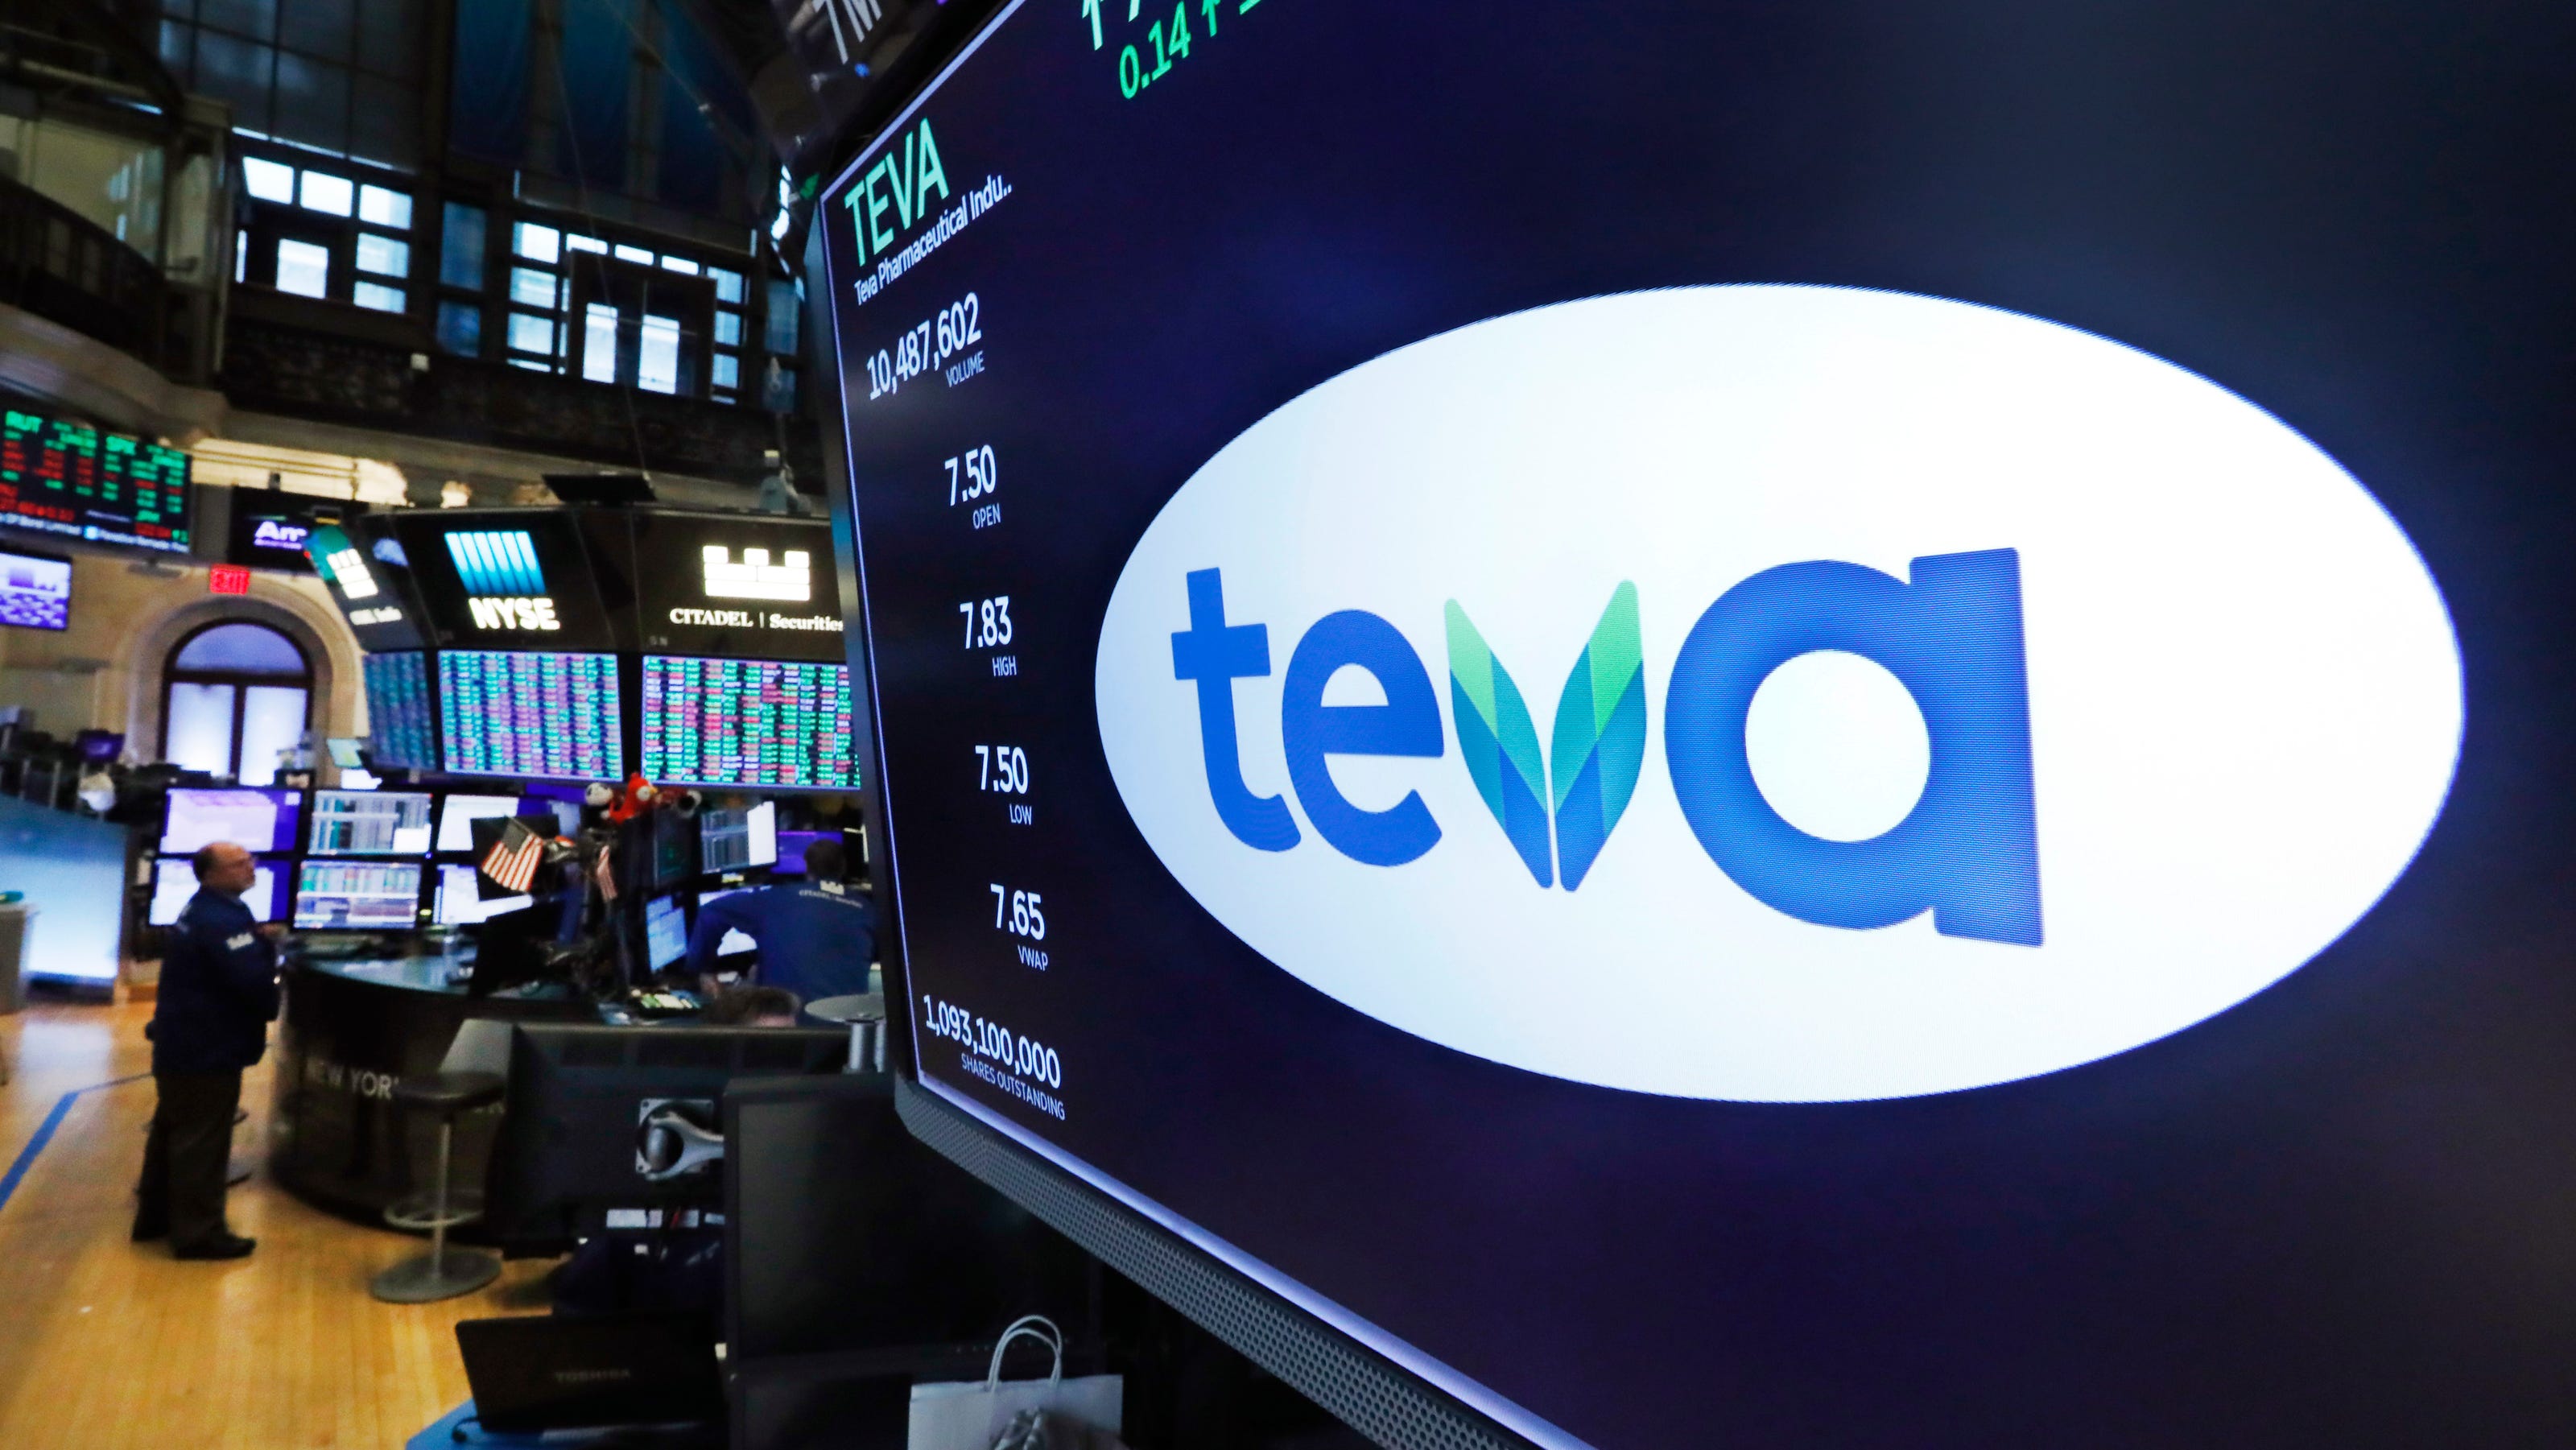 Teva Pharmaceutical Industries opioid settlement: What